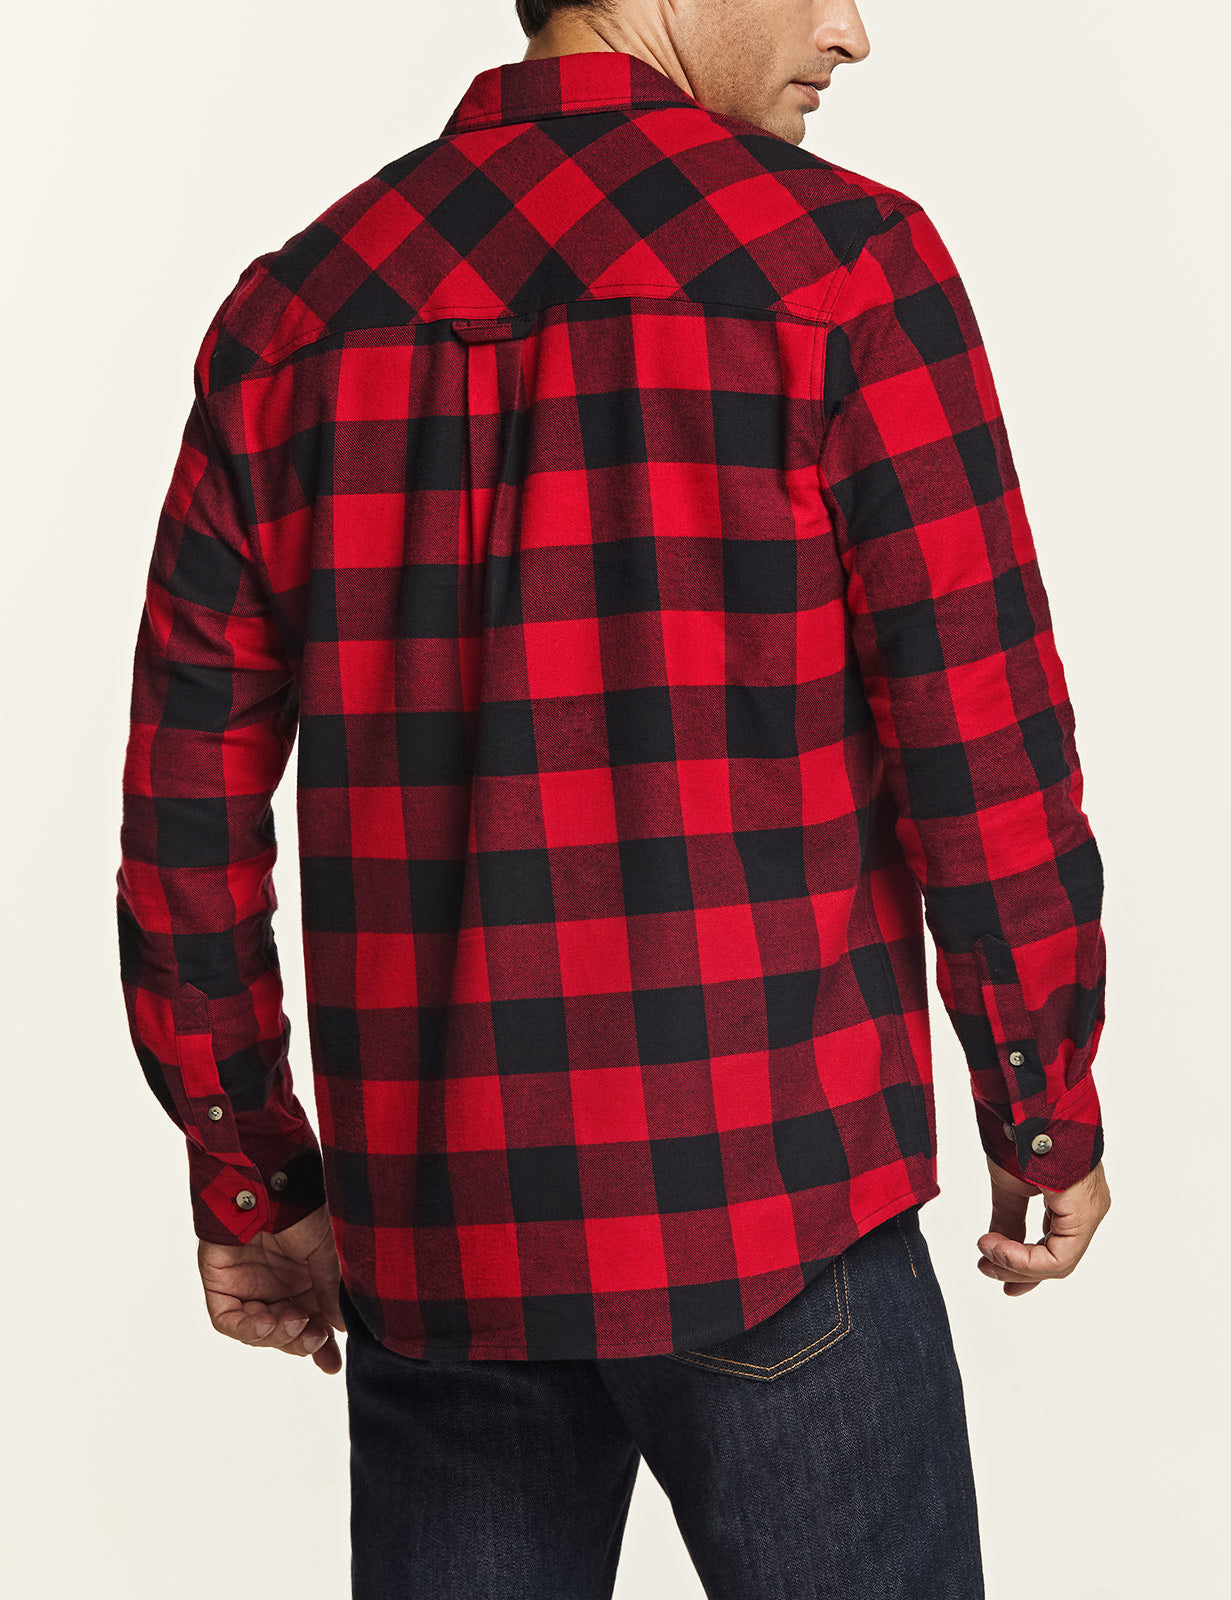 [HOF110] Plaid Flannel Gear CQR-Tactical – Shirt